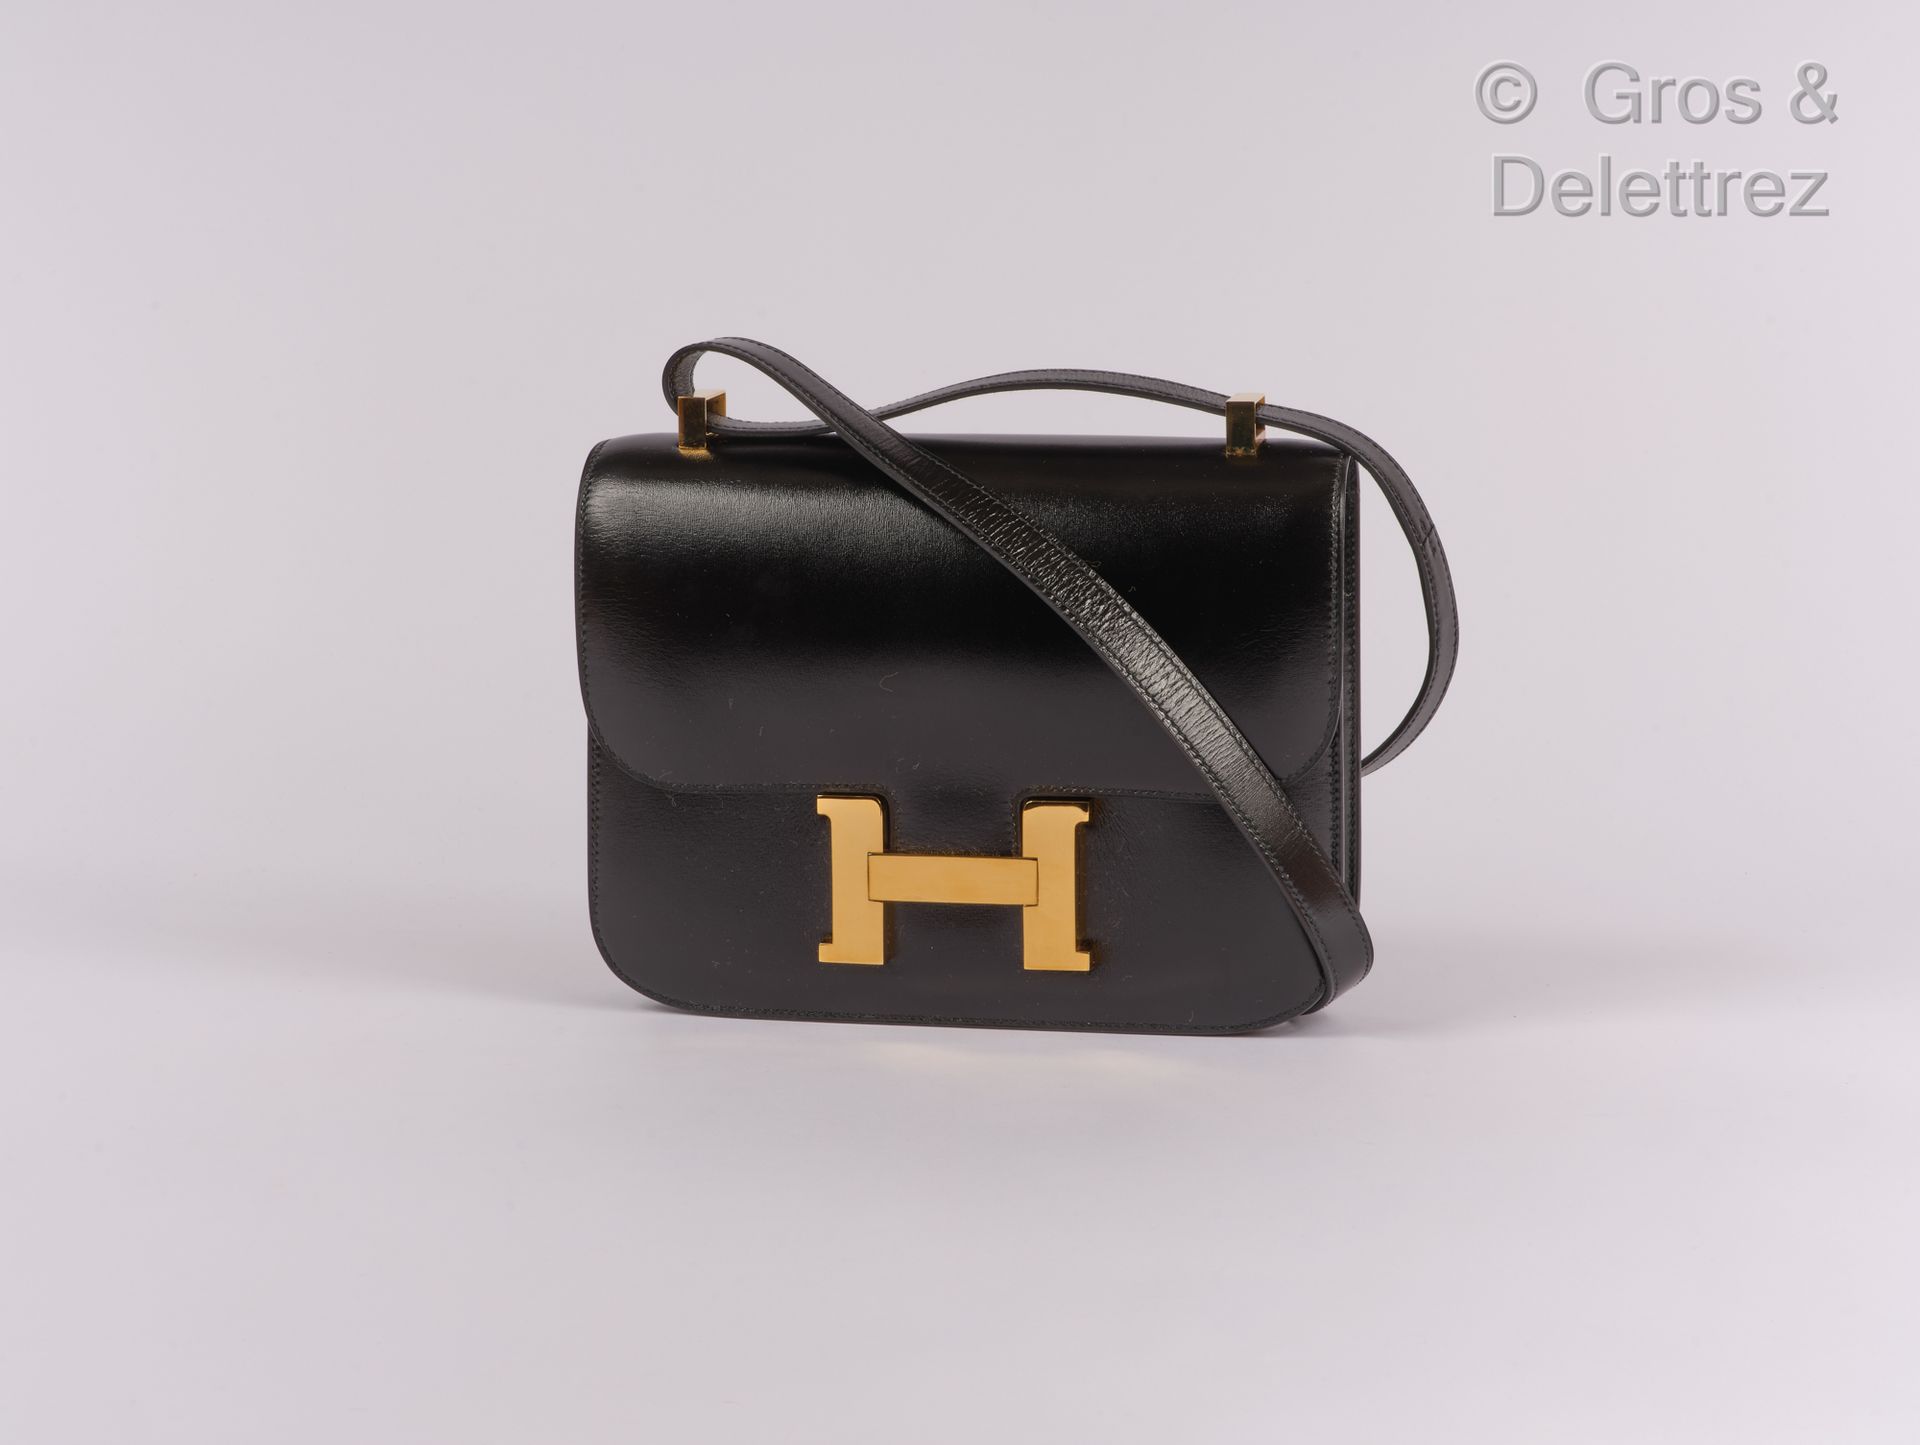 HERMÈS Paris made in France Constance "包，23厘米，黑色盒子，镀金 "H "形扣，肩带，外袋。状况非常好。